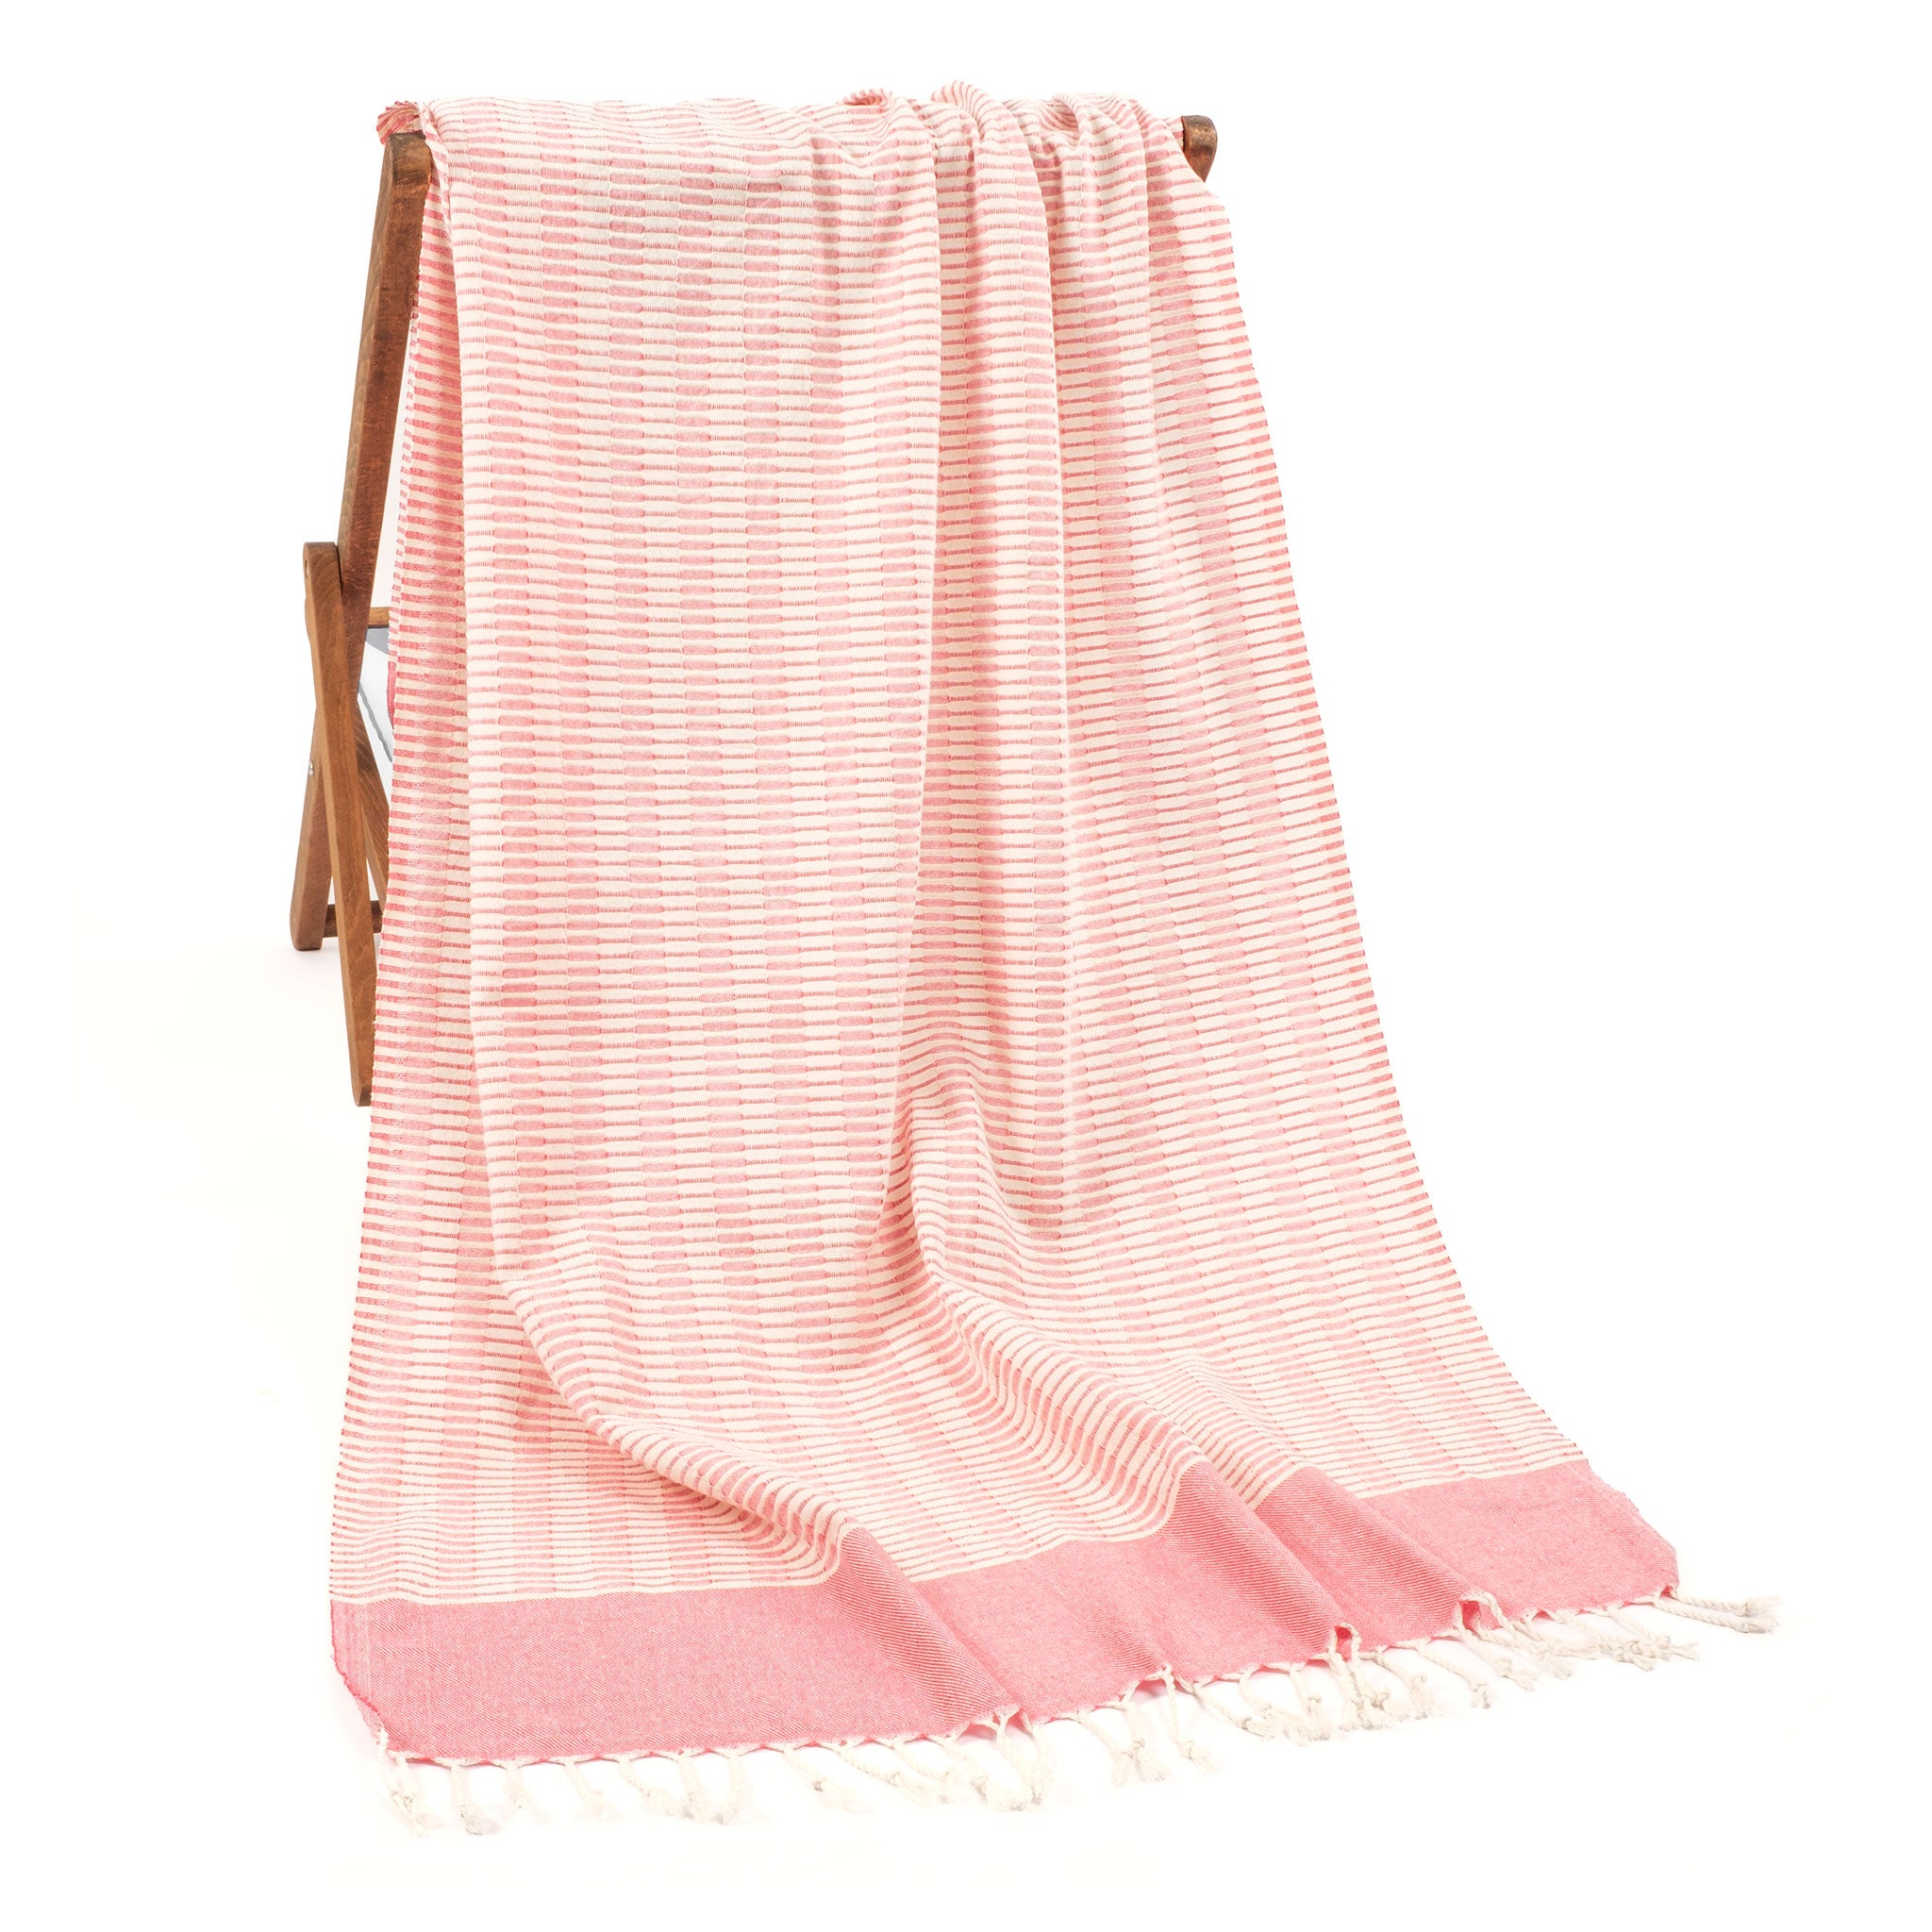 American Soft Linen - 100% Cotton Turkish Peshtemal Towels 40x70 Inches - Coral - 1